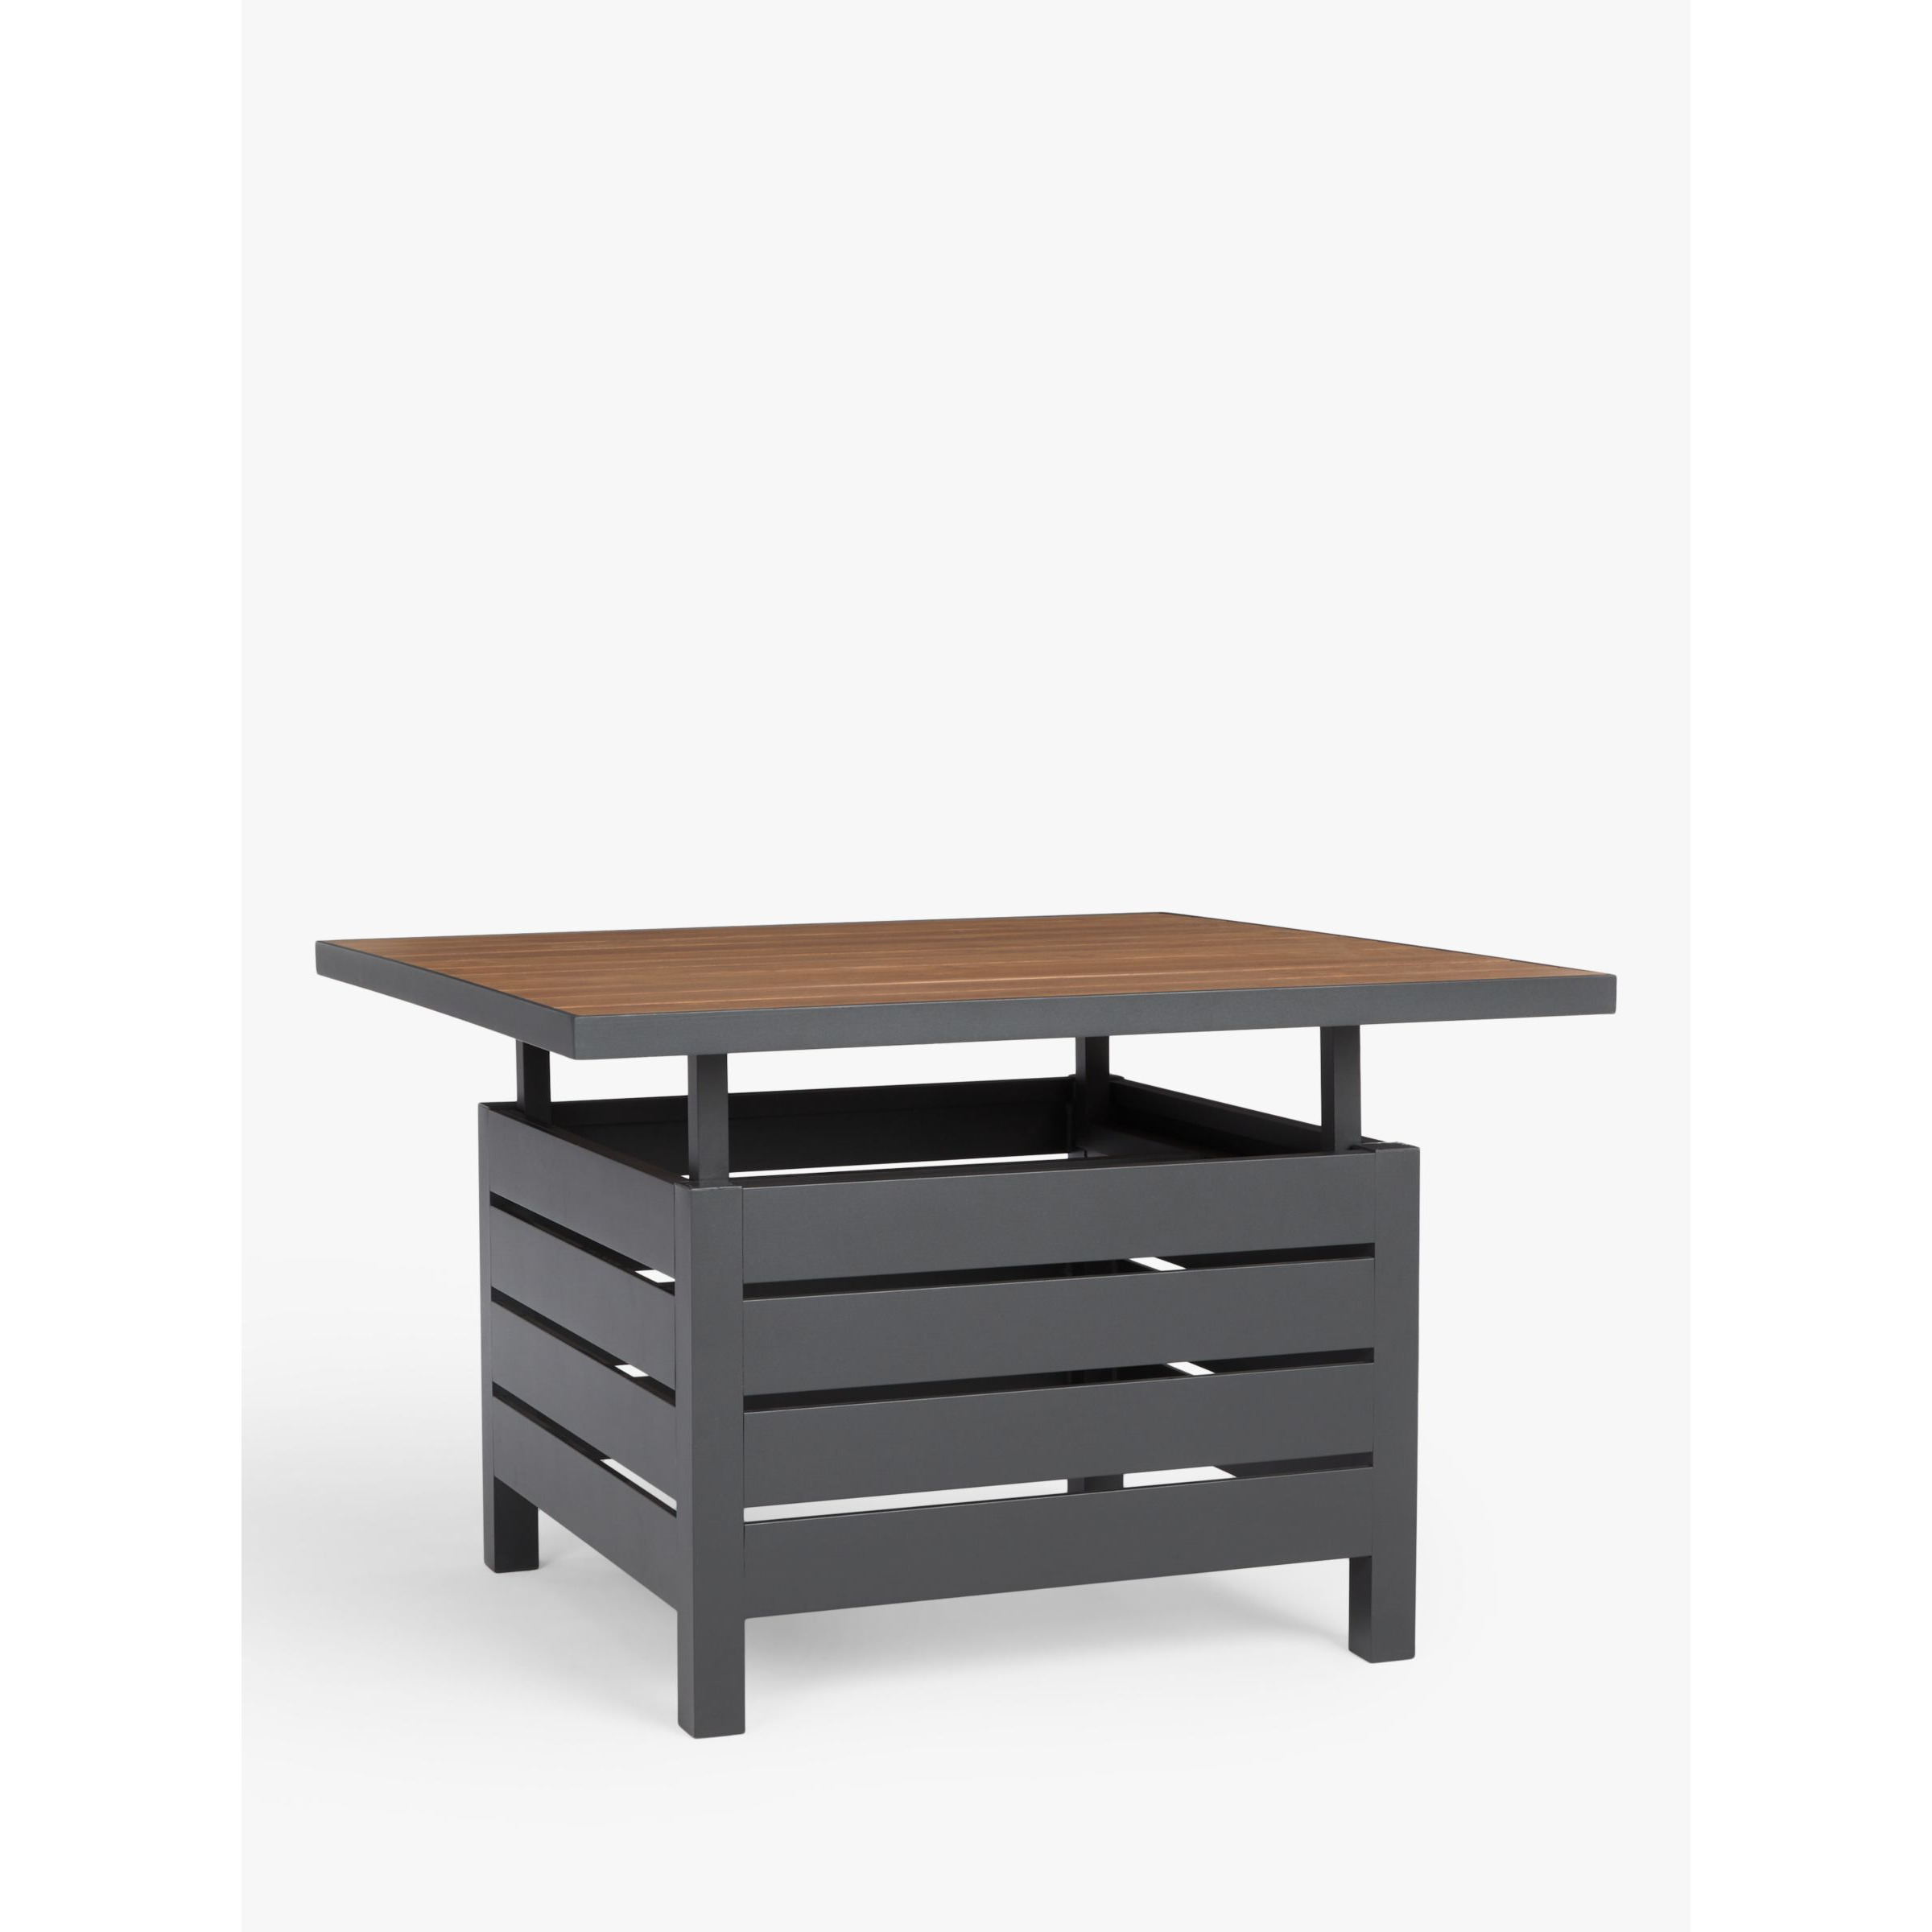 John Lewis Platform Height-Adjustable Square Garden Dining Table, 81cm, Grey - image 1